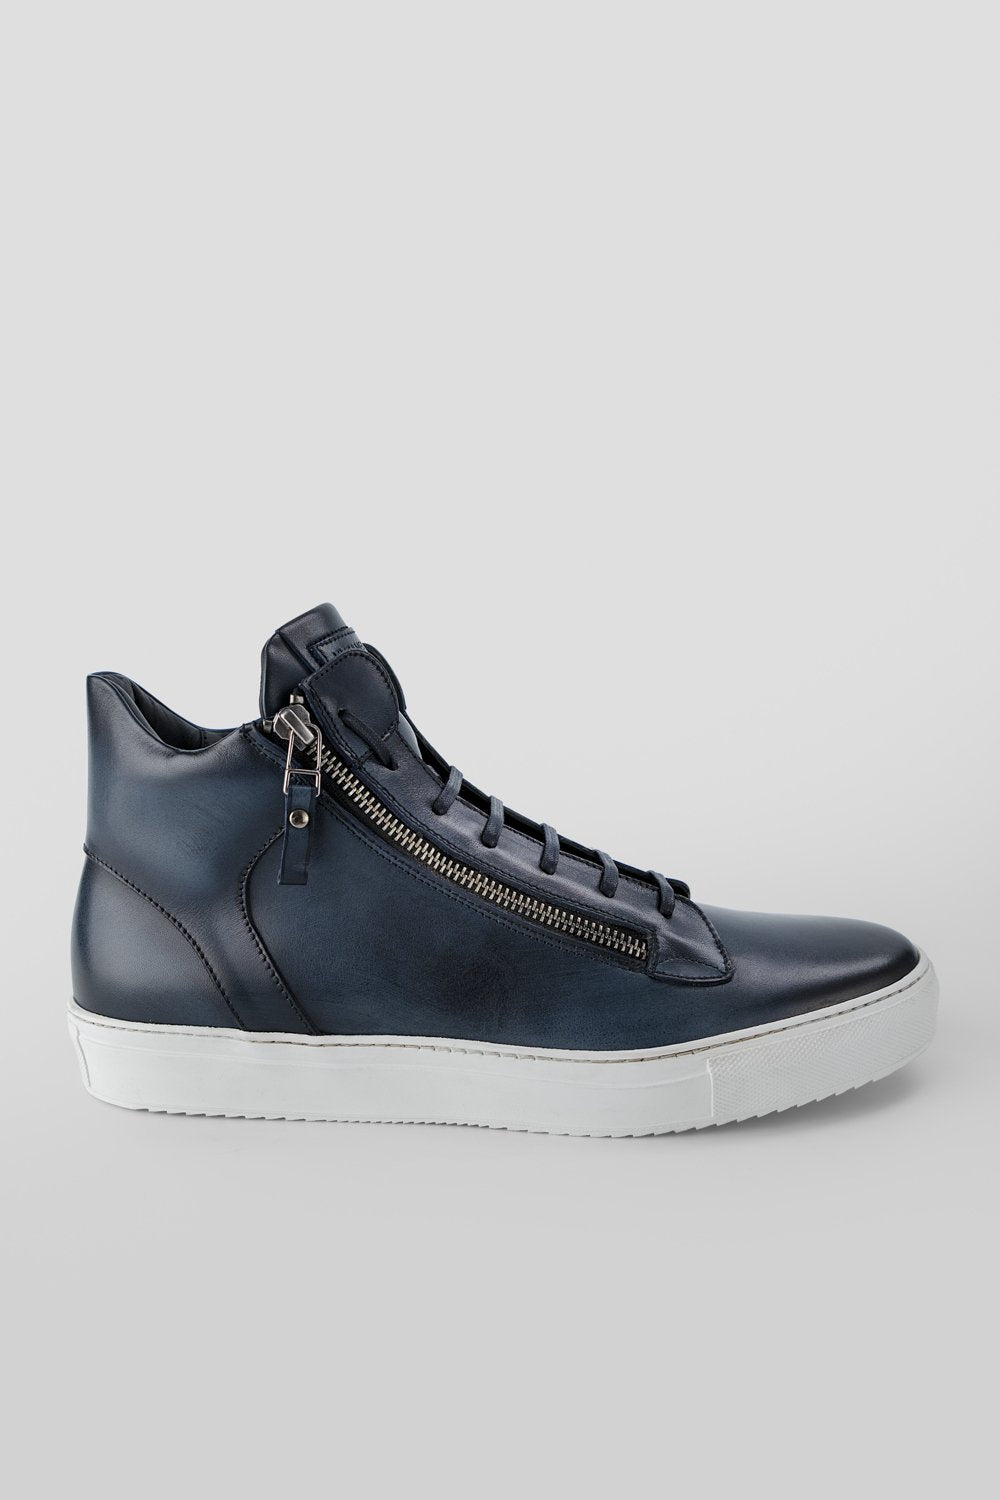 Alex Top Sider Patina Sneaker | Men Casual Shoes I Que Shebley